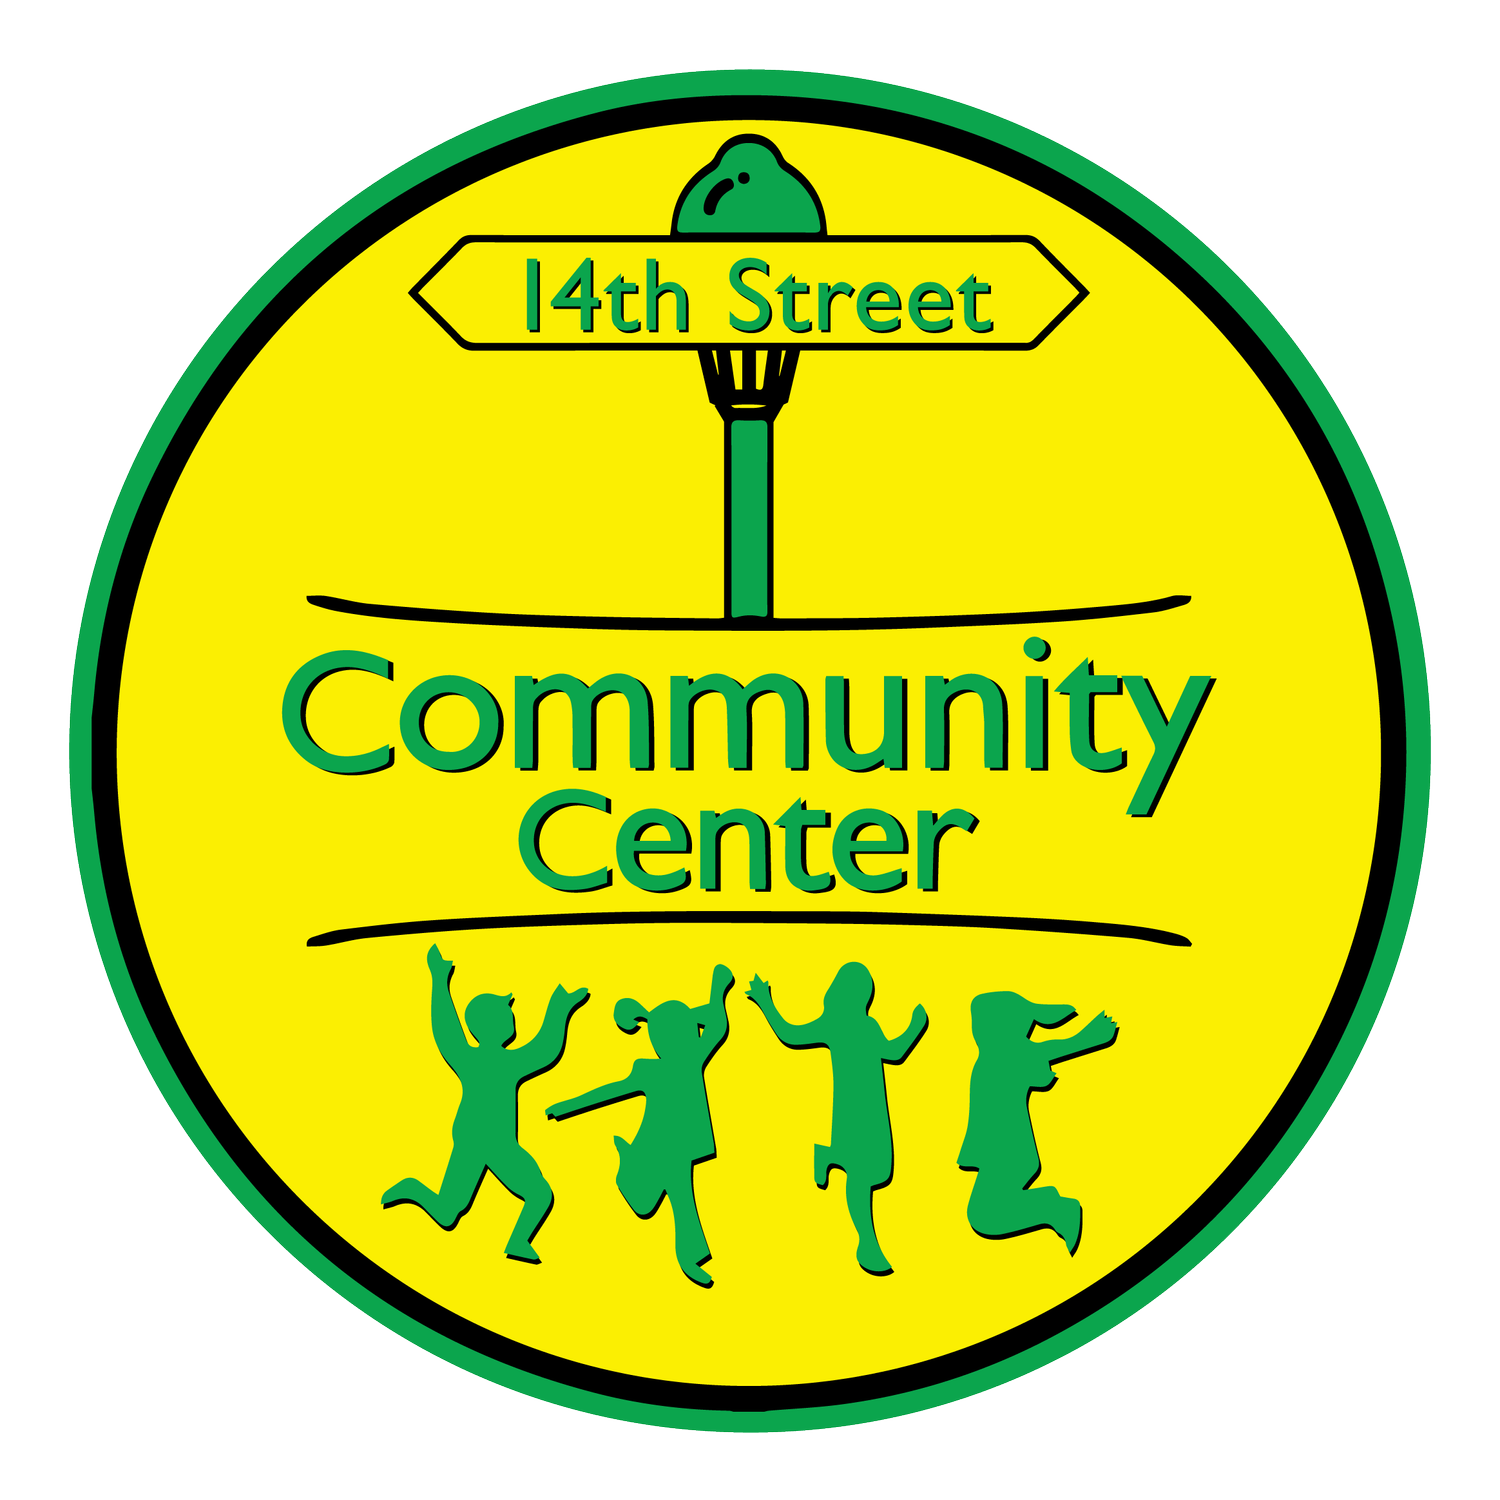 14th Street Community Center